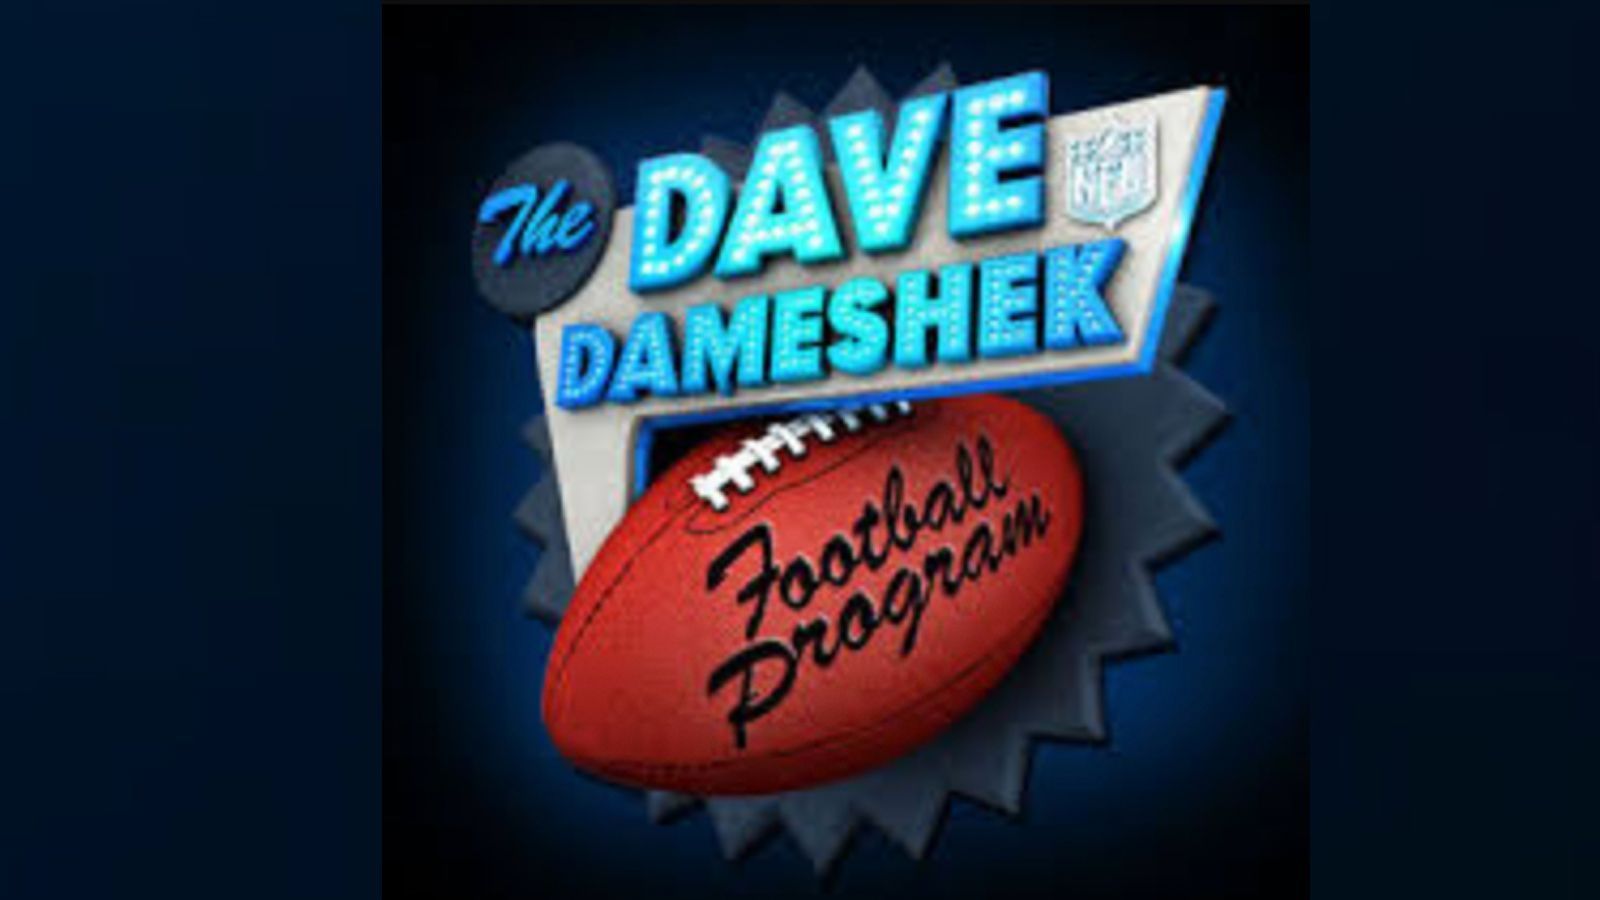 
                <strong>Podcast: The Dave Dameshek Football Programm</strong><br>
                Dave Dameshek beobachtet die NFL ein Stück weit aus der Fan-Sicht.
              